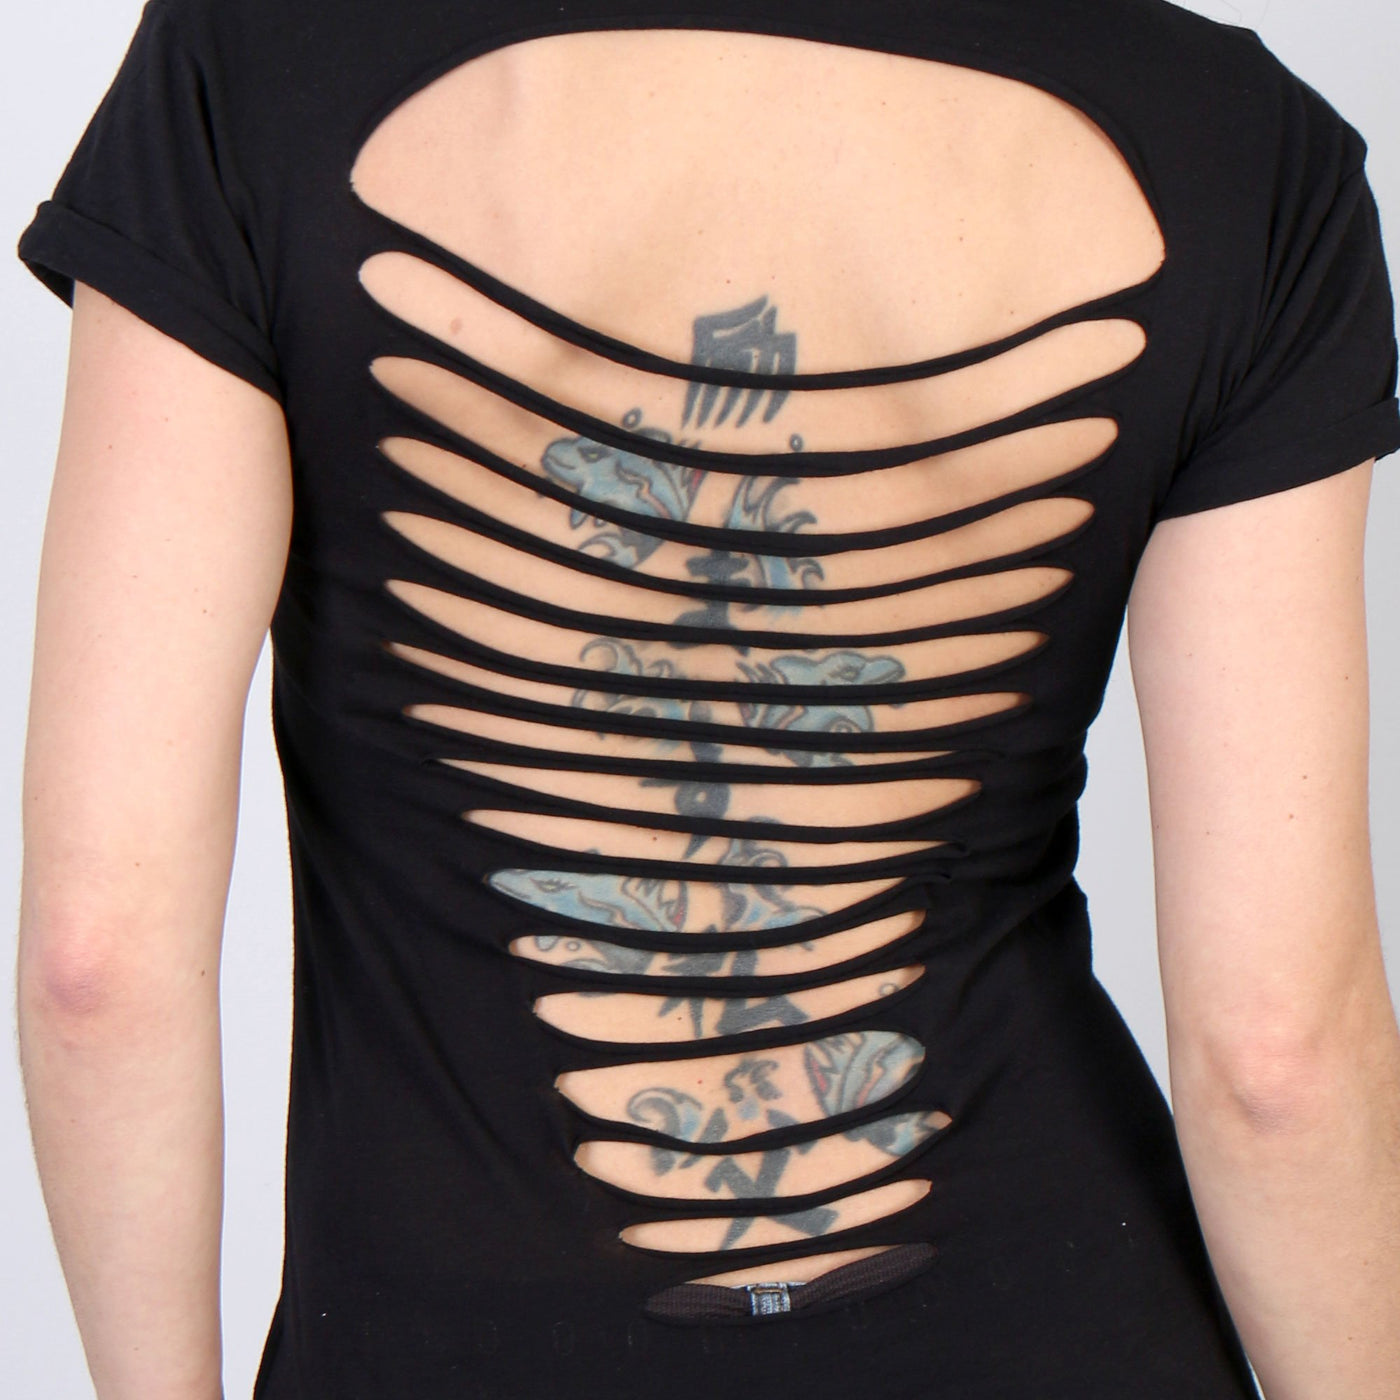 Hot Leathers Women's Slit Back Asphalt Angel T-Shirt